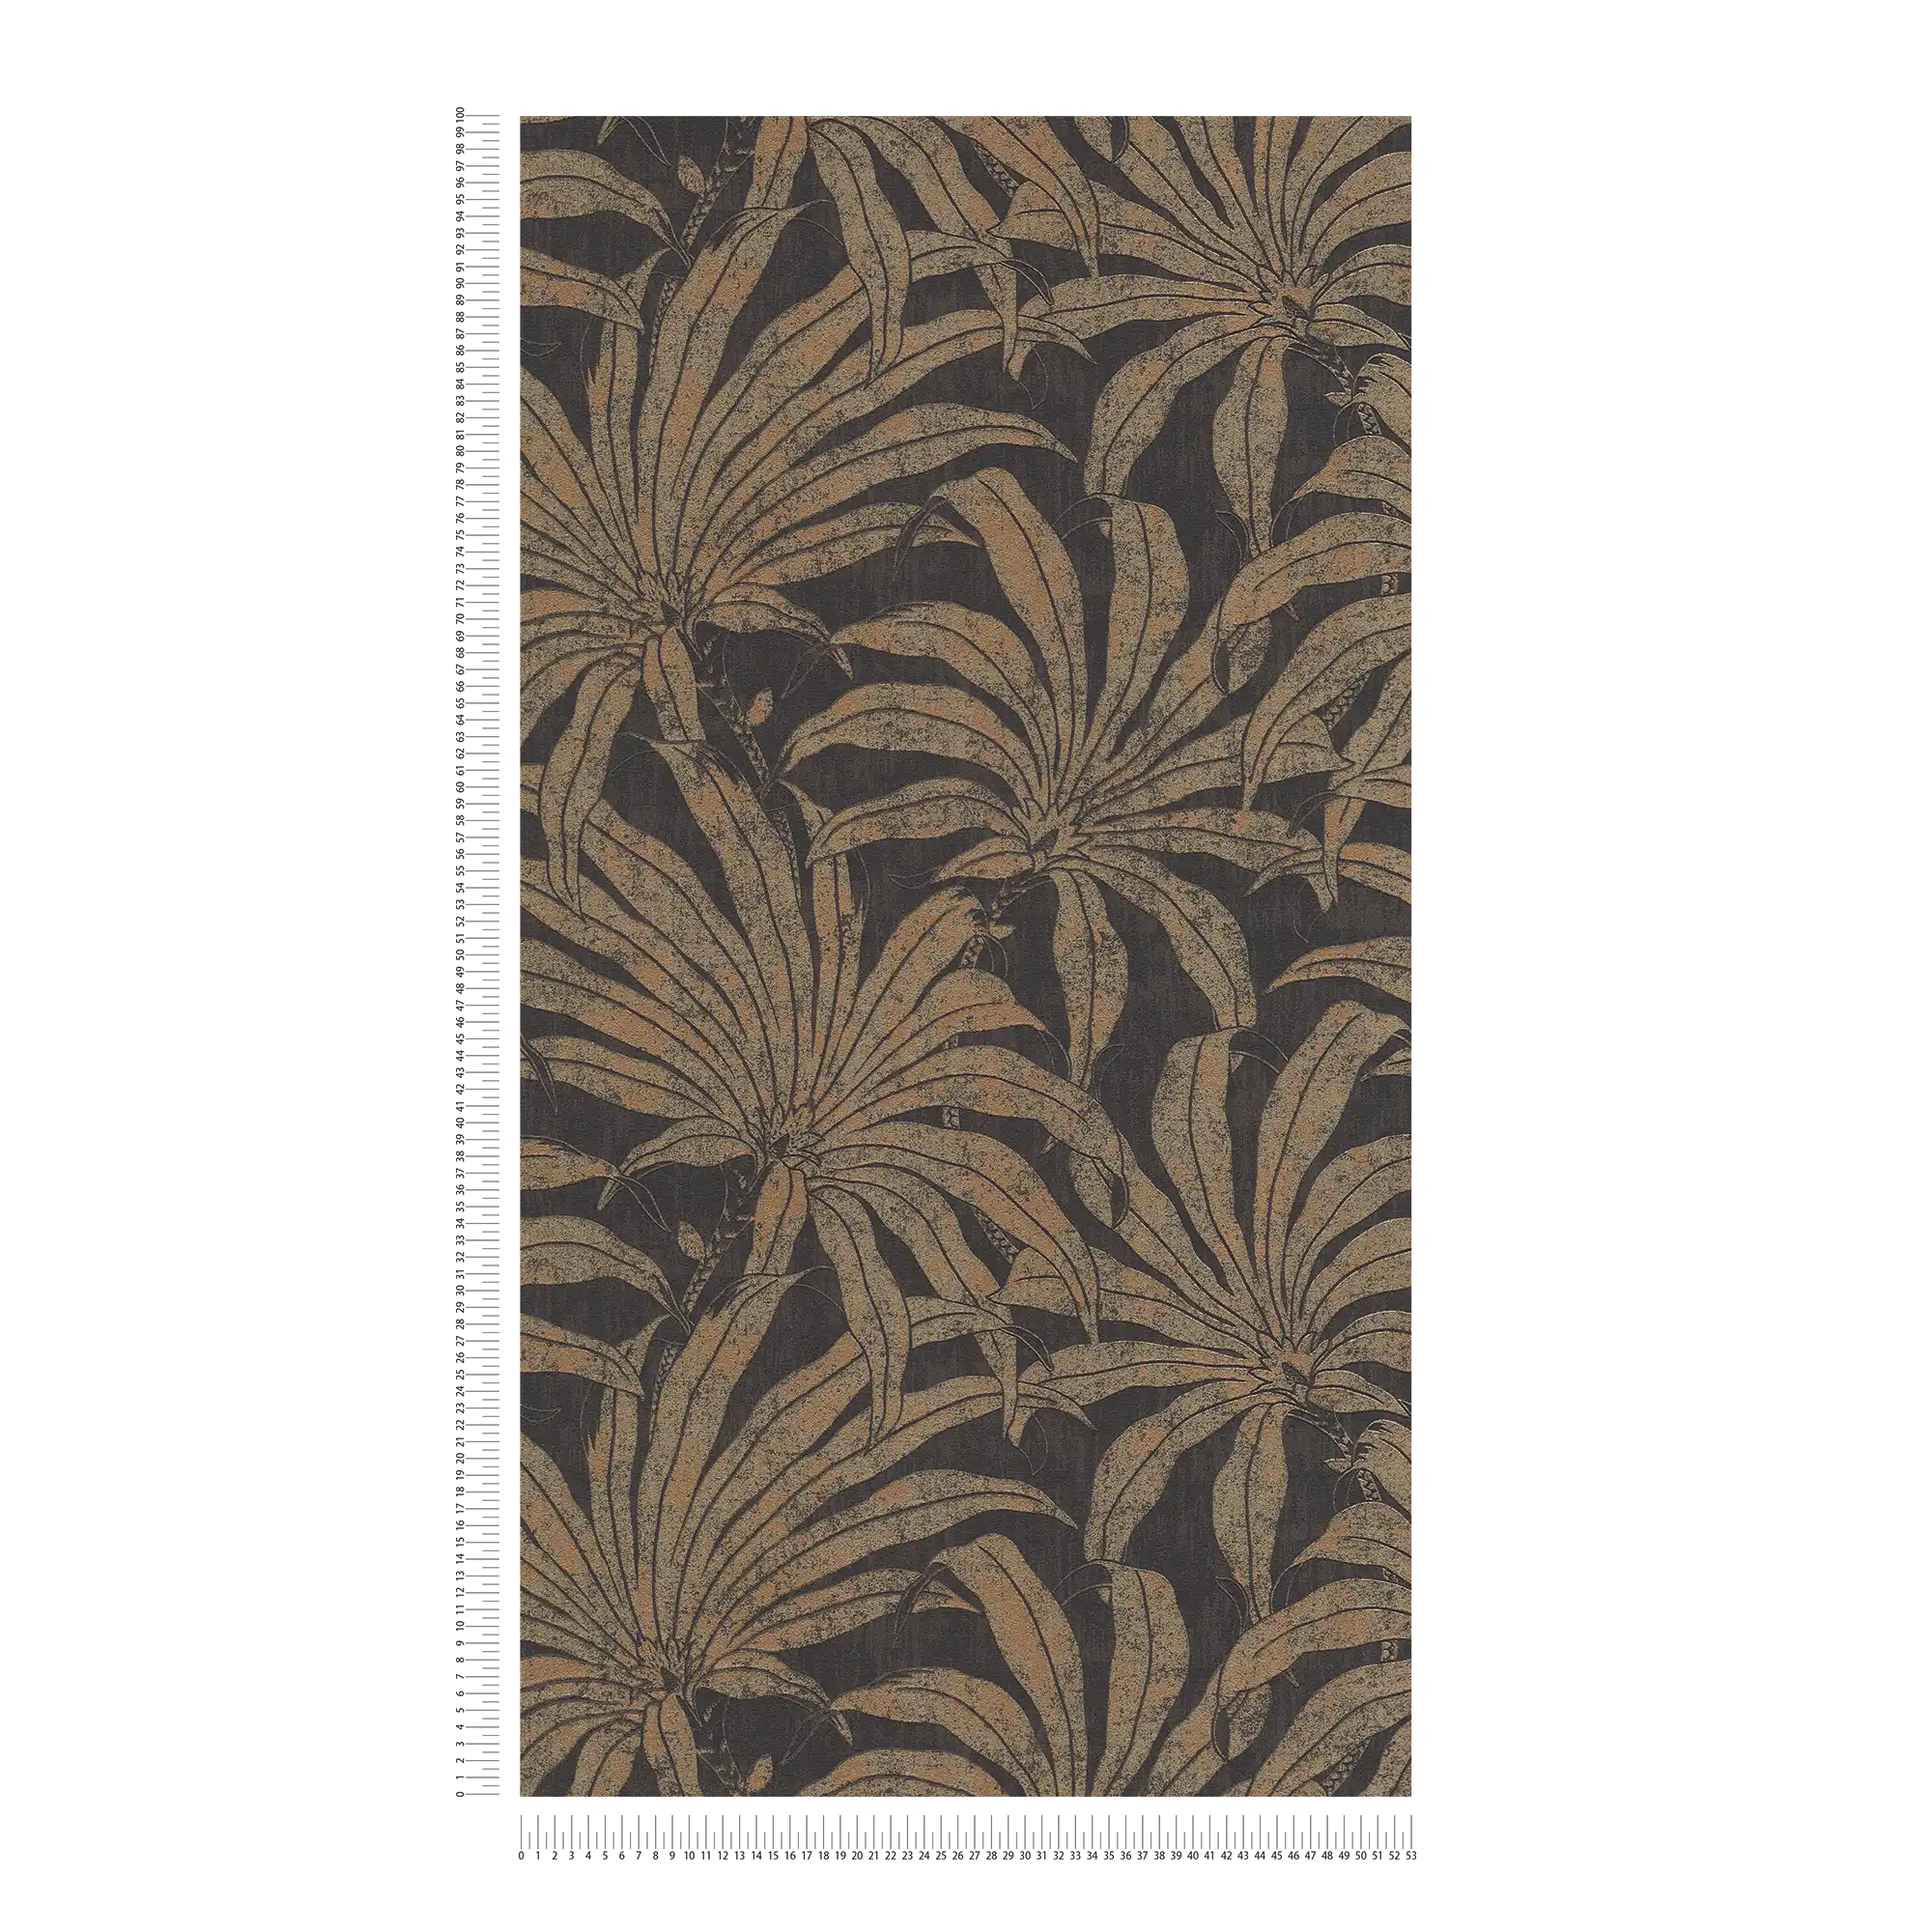             Elegant pattern wallpaper with jungle flower design - black, gold, bronze
        